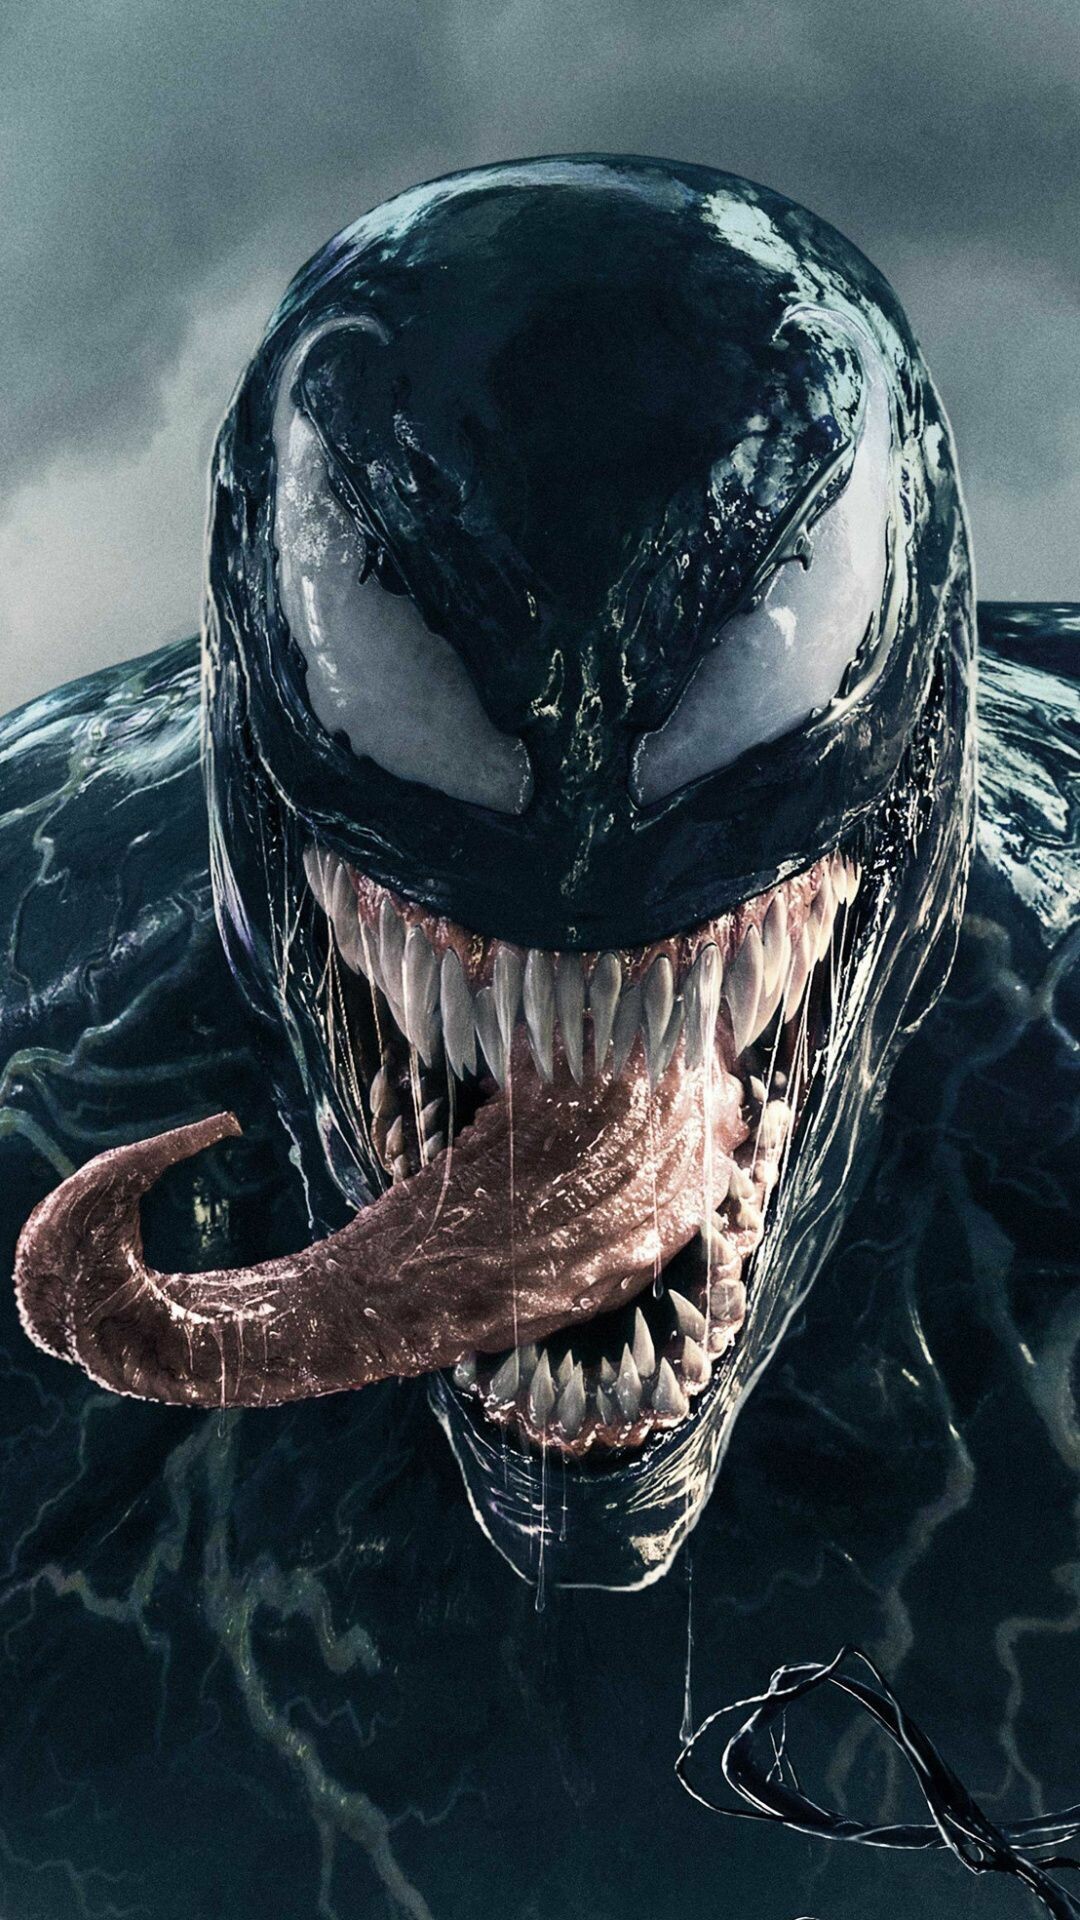 Marvel Villain: Venom, Originally introduced as a living alien costume in The Amazing Spider-Man #252. 1080x1920 Full HD Wallpaper.